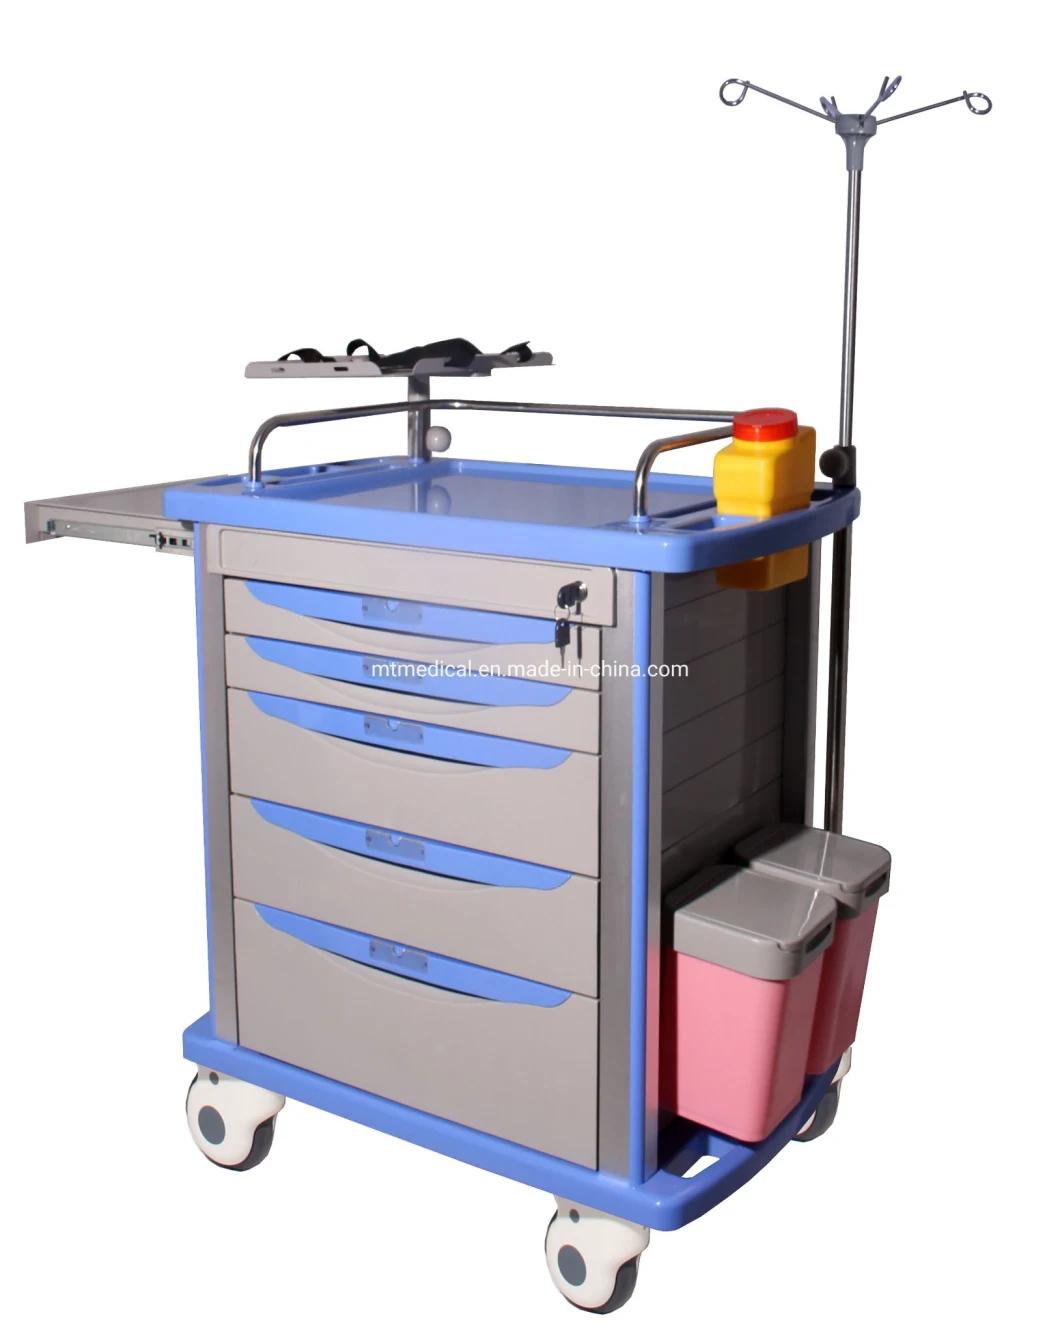 Cq-02 Hospital Nursing Medical ABS Emergency Trolley with Drawer